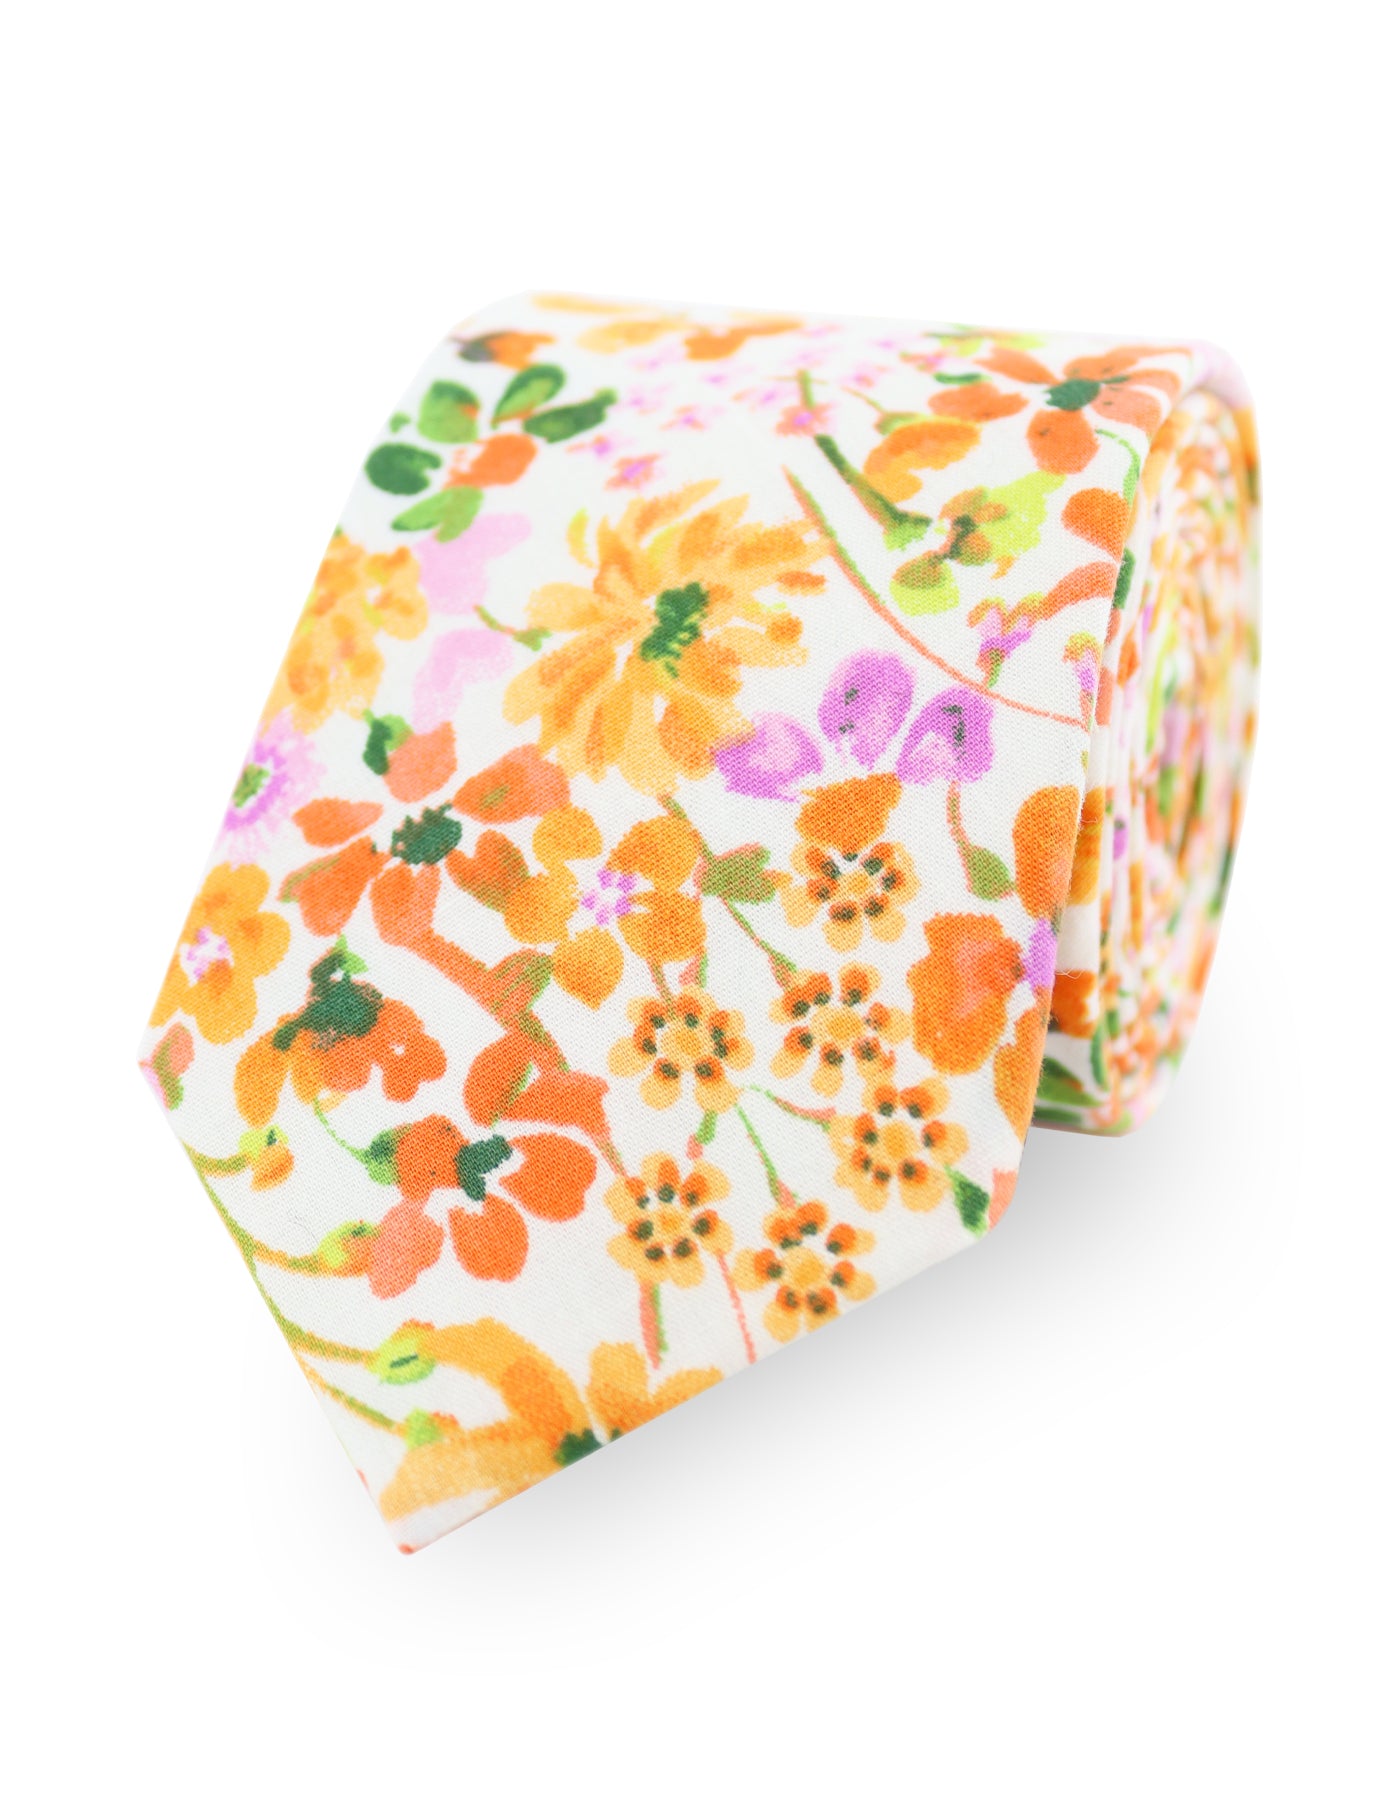 100% Cotton Floral Print Tie - Orange